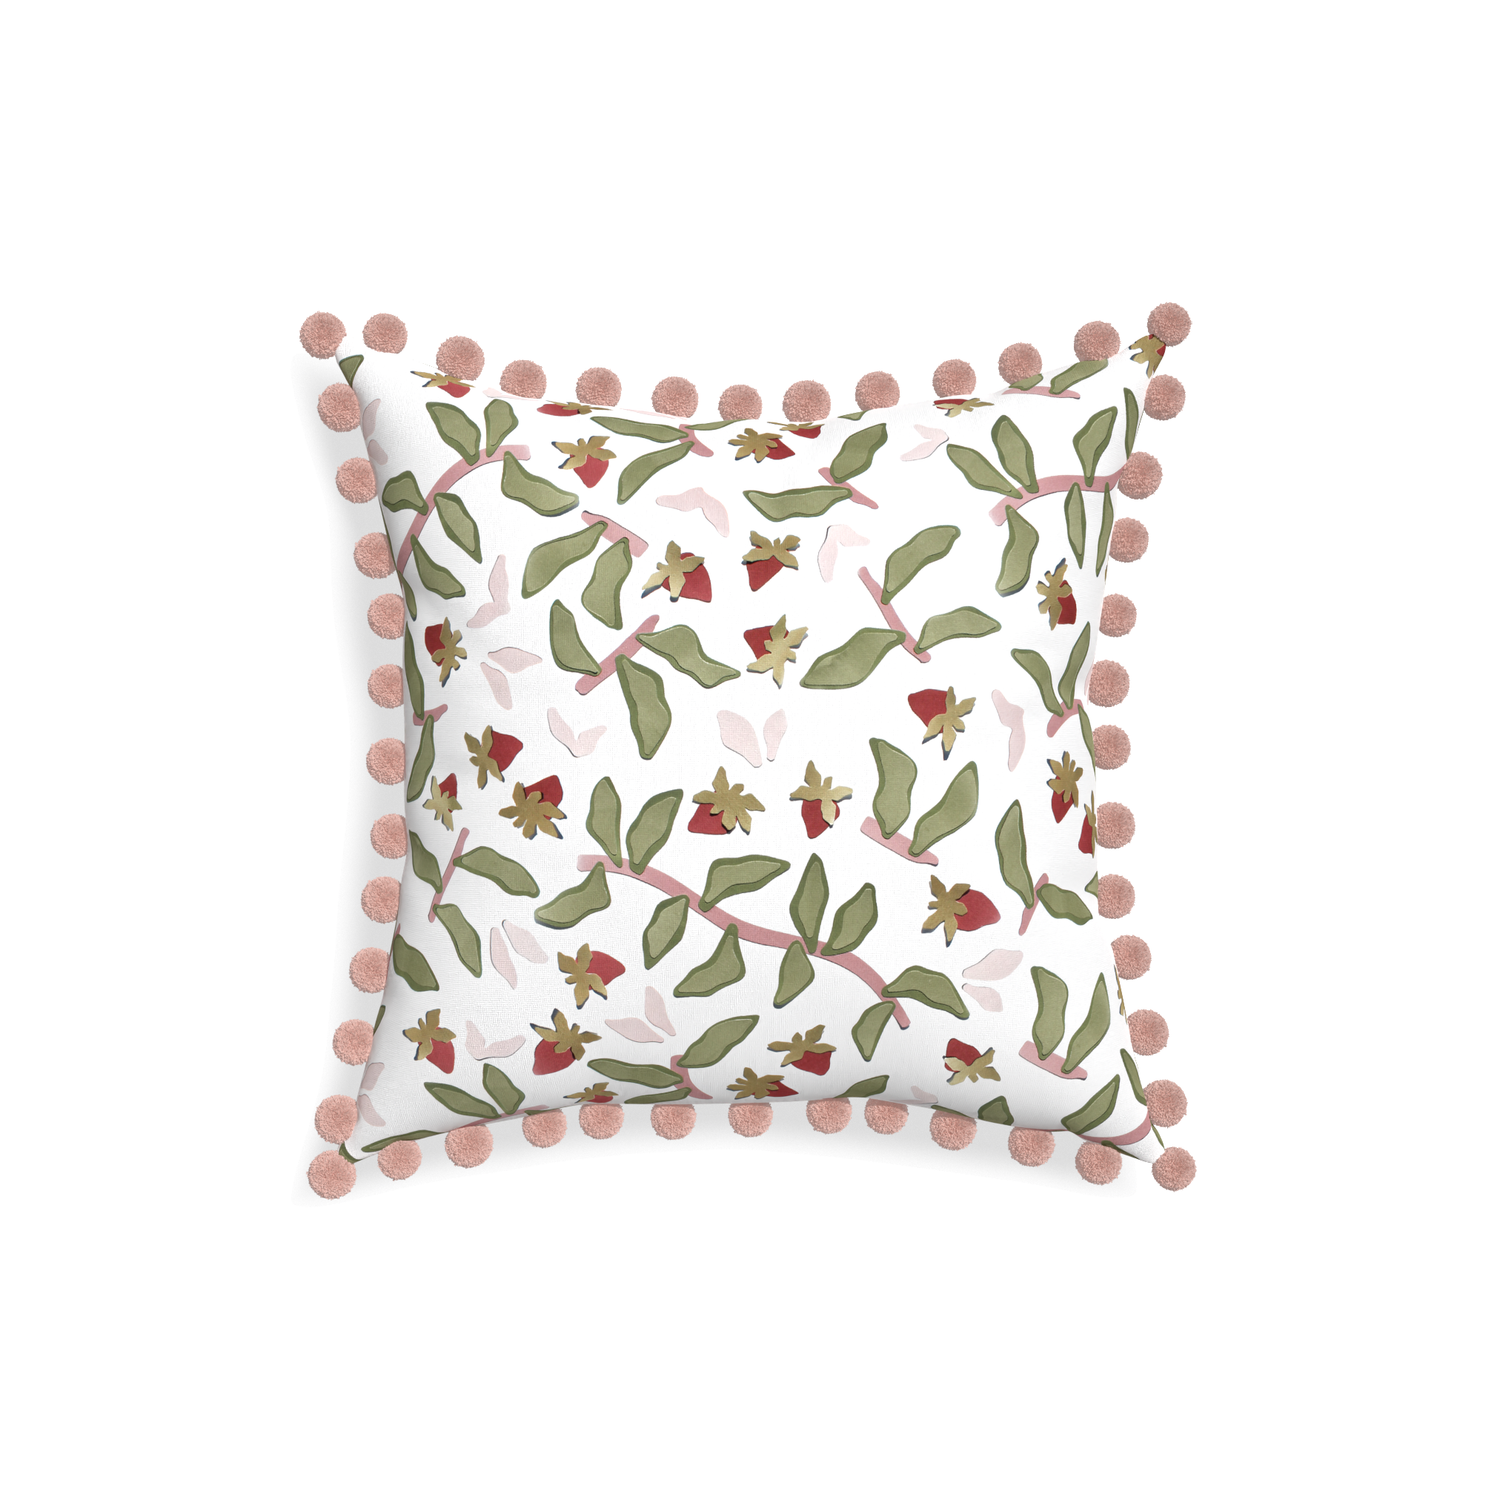 18-square nellie custom strawberry & botanicalpillow with rose pom pom on white background